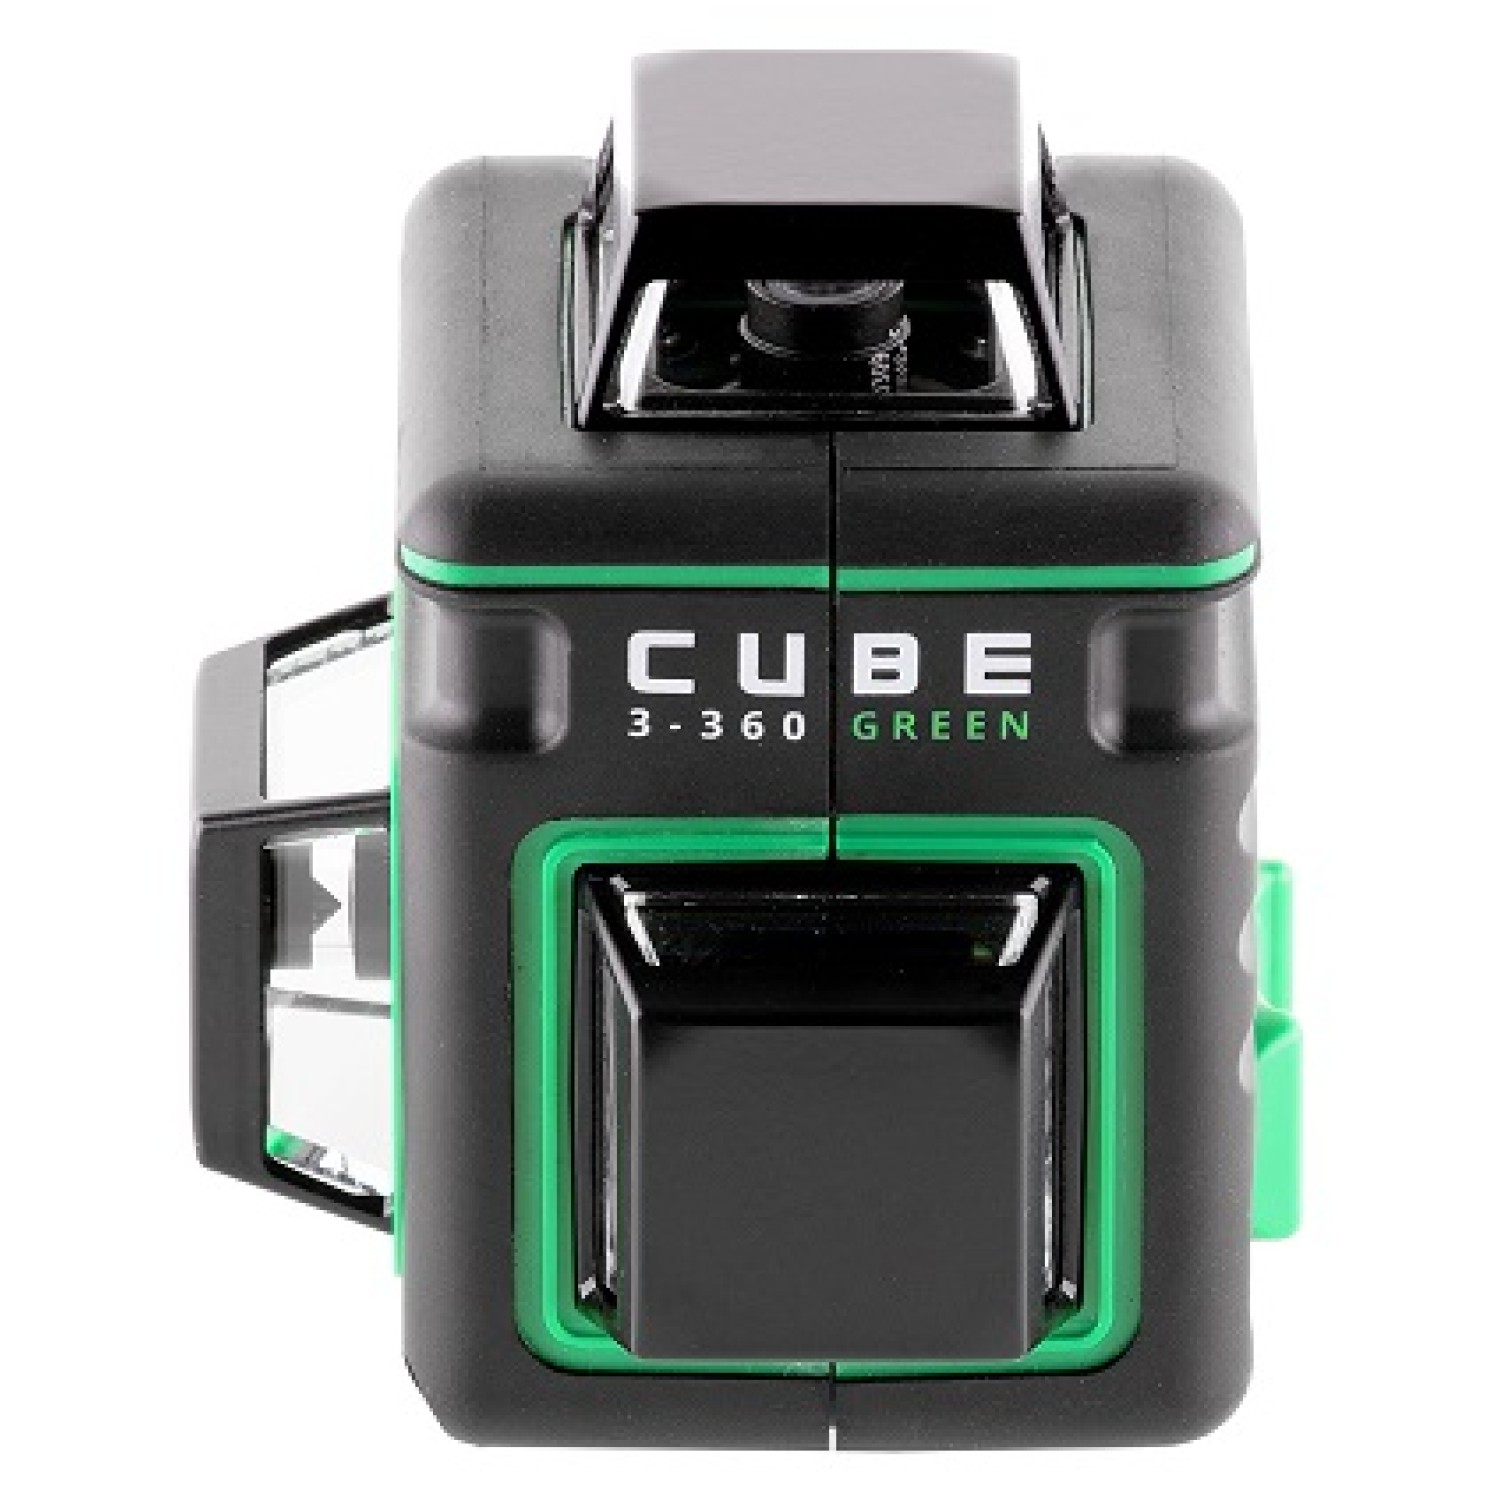 Cube 360 basic edition. Ada Cube 3-360 Green. Ada Cube 3-360 Basic Edition а00559. Уровень лазерный ada Cube 3-360 Green Ultimate Edition. Лазерный уровень ada Cube 360 Basic Edition.